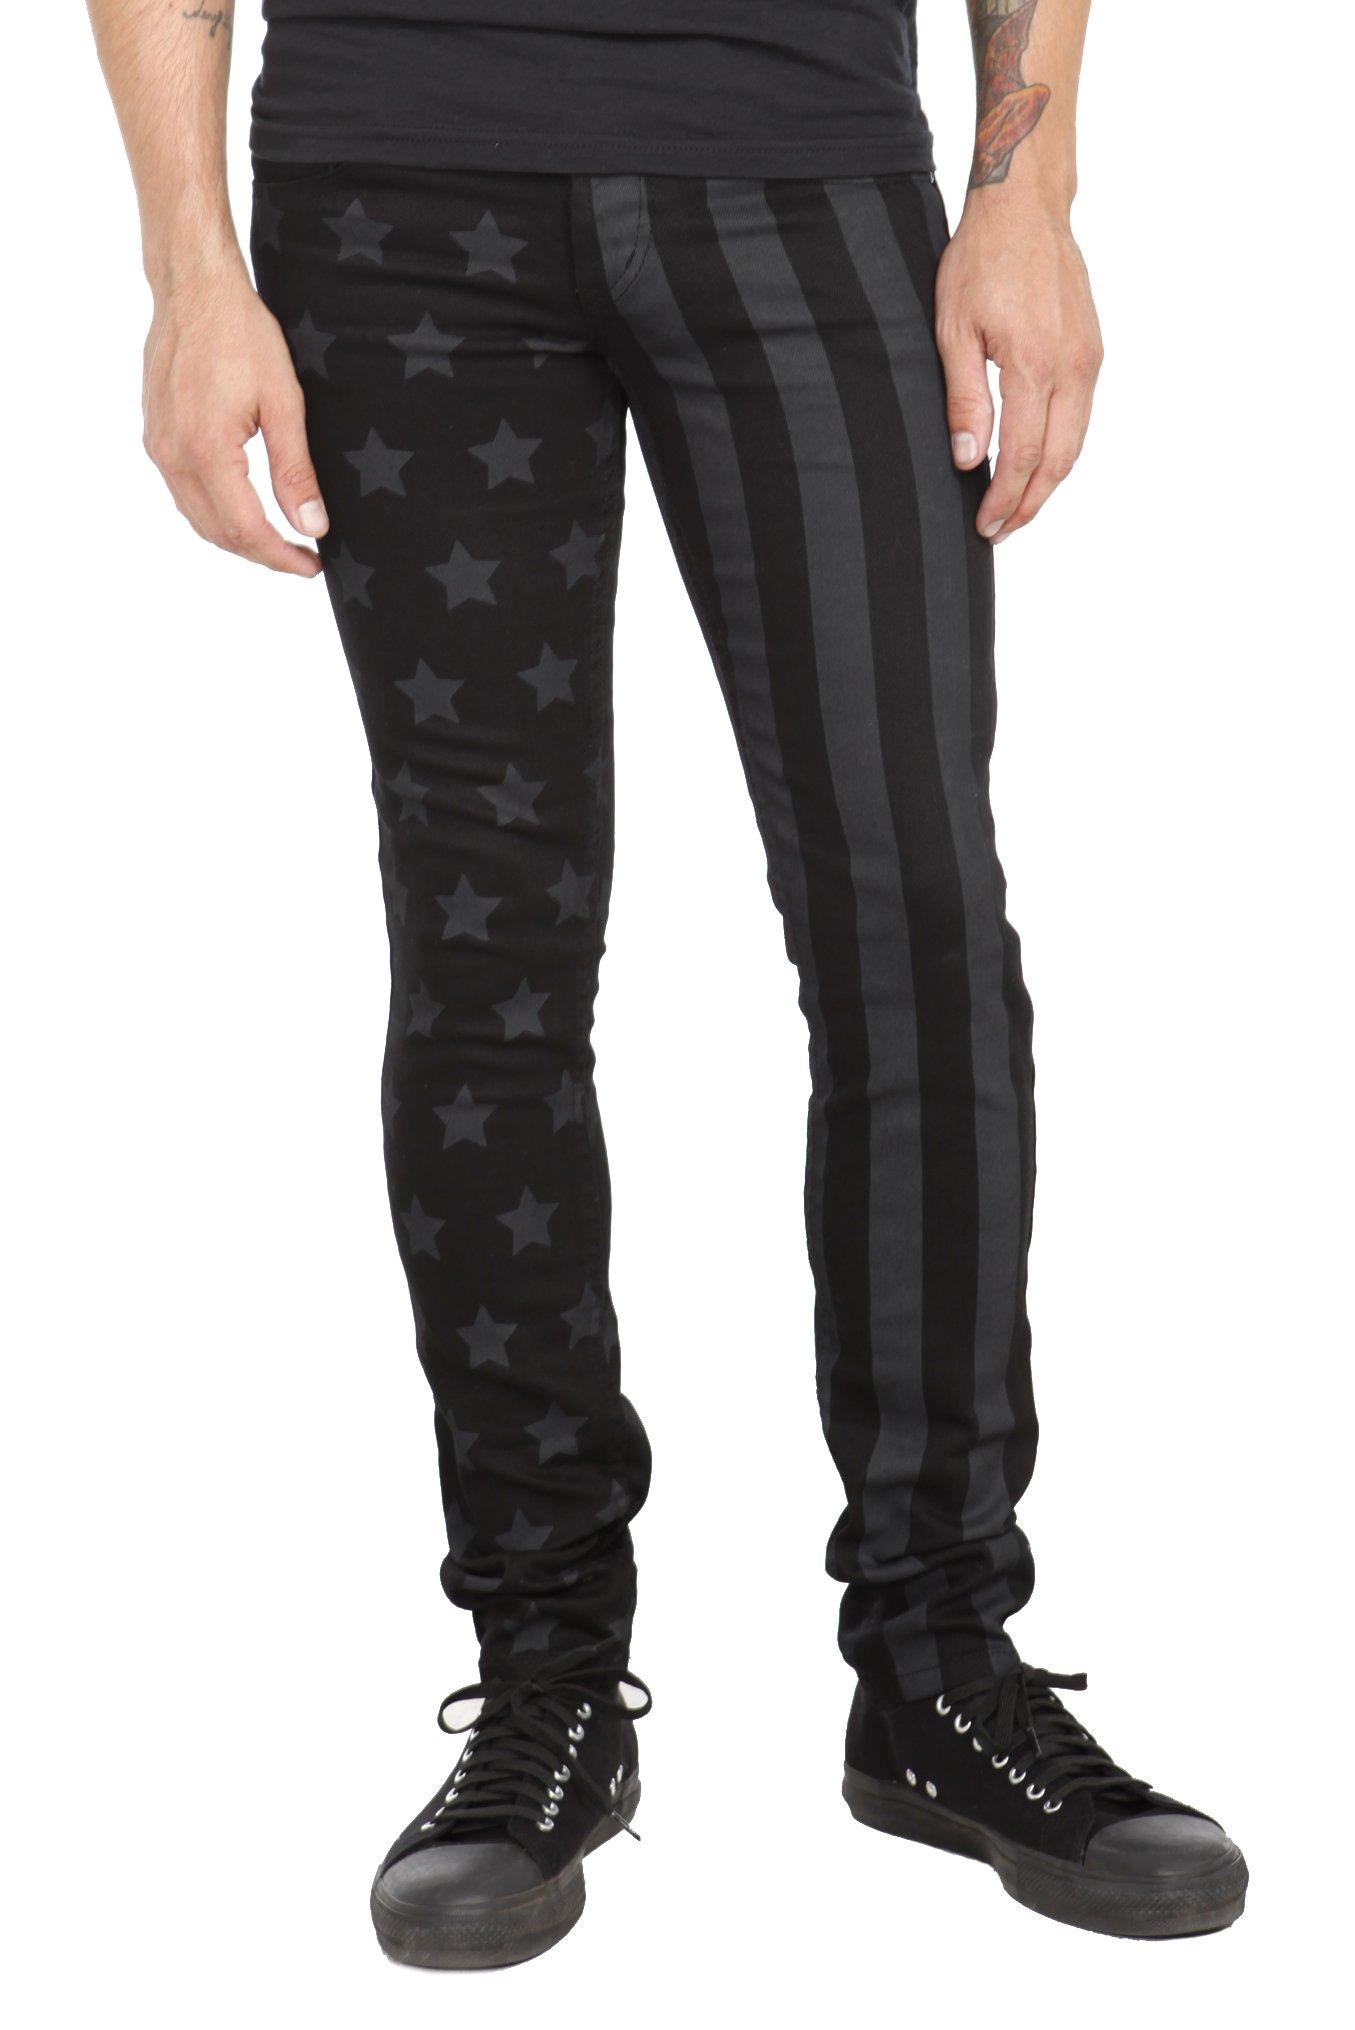 XXX RUDE Black And Grey Flag Skinny Fit Denim Jeans, BLACK, hi-res